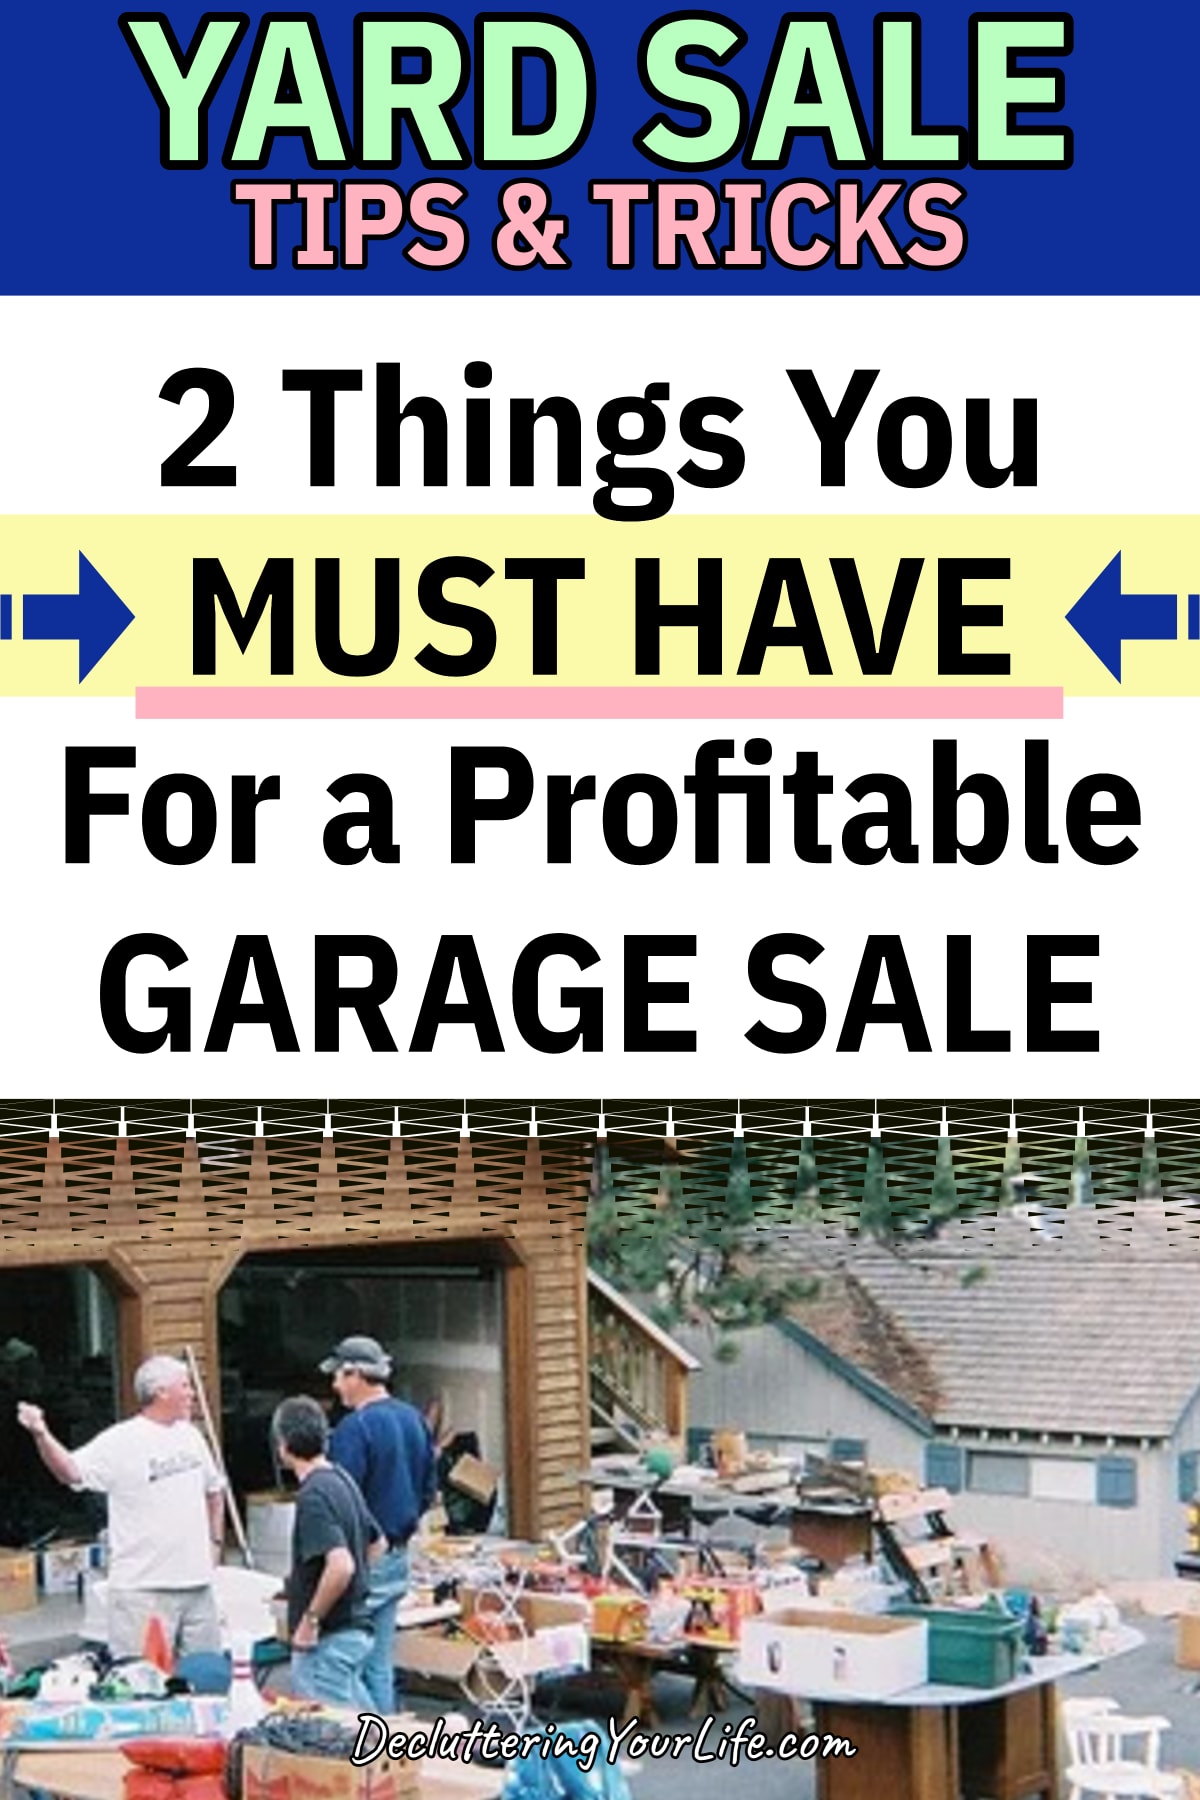 yard sale tips - 2 garage sale must haves for a profitable garage sale